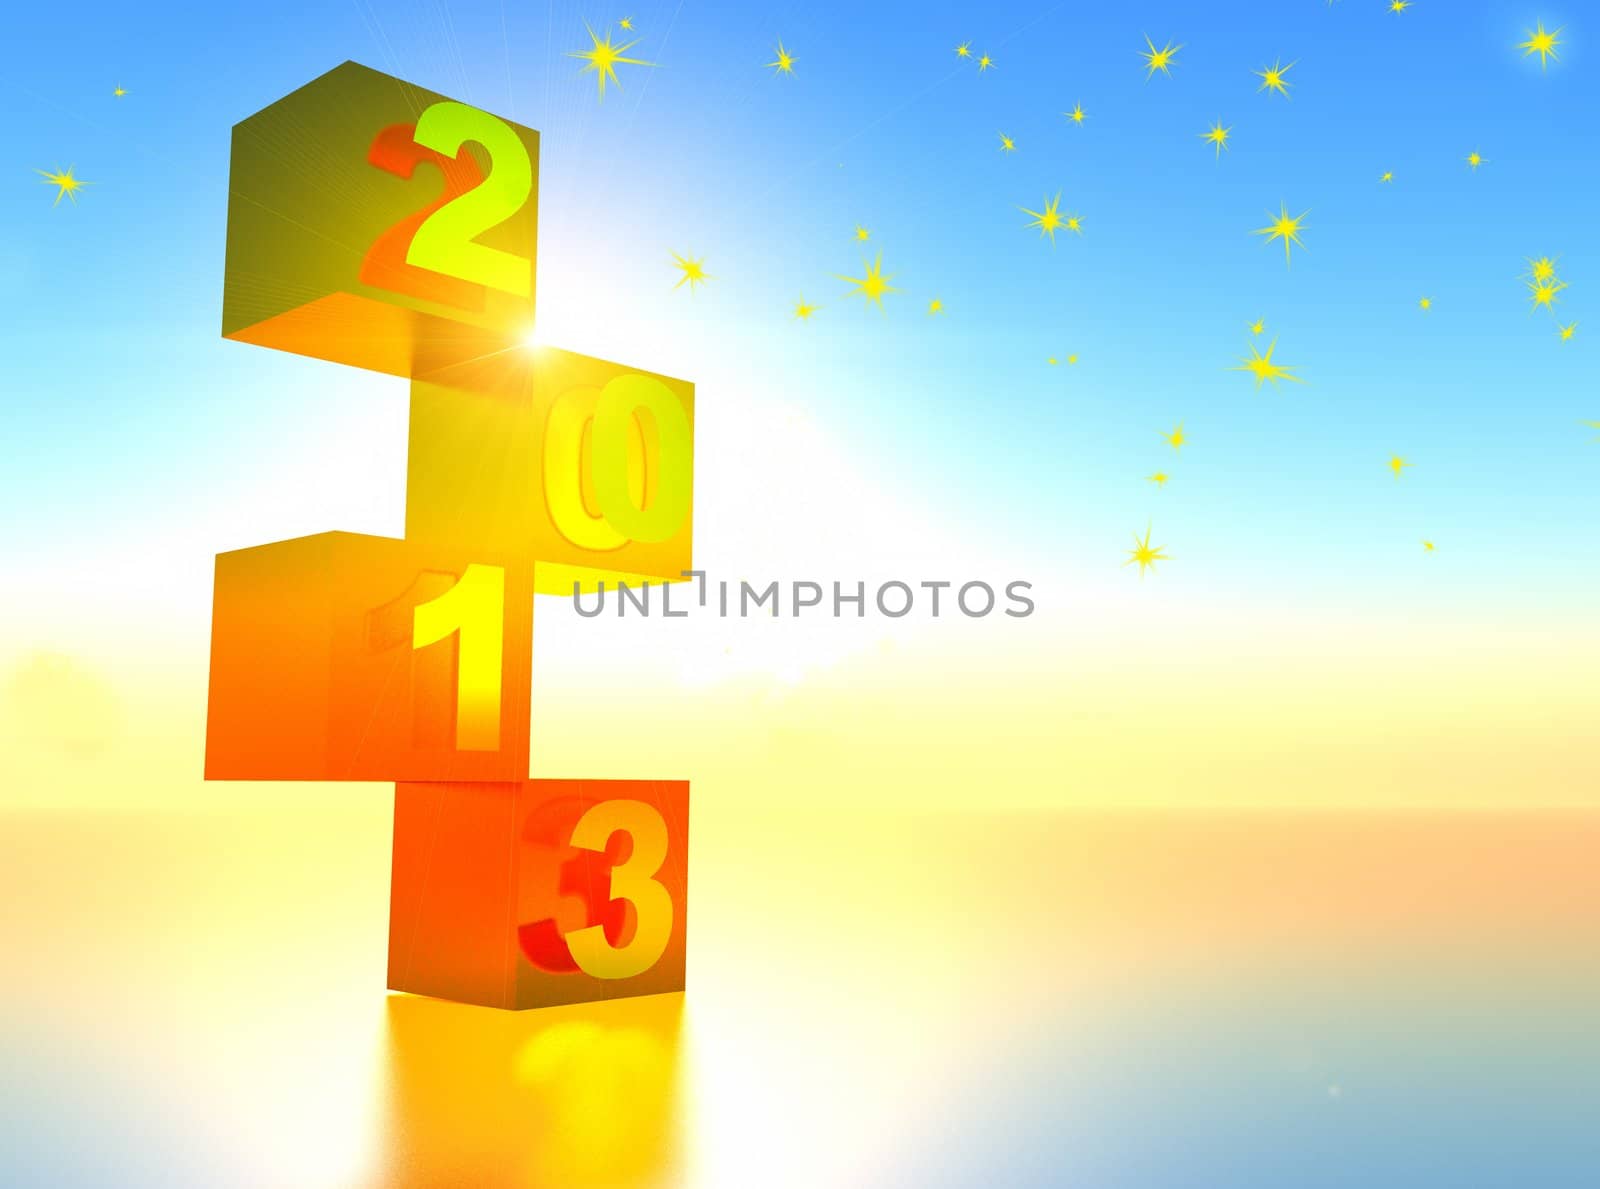 3 D illustration of the number 2013